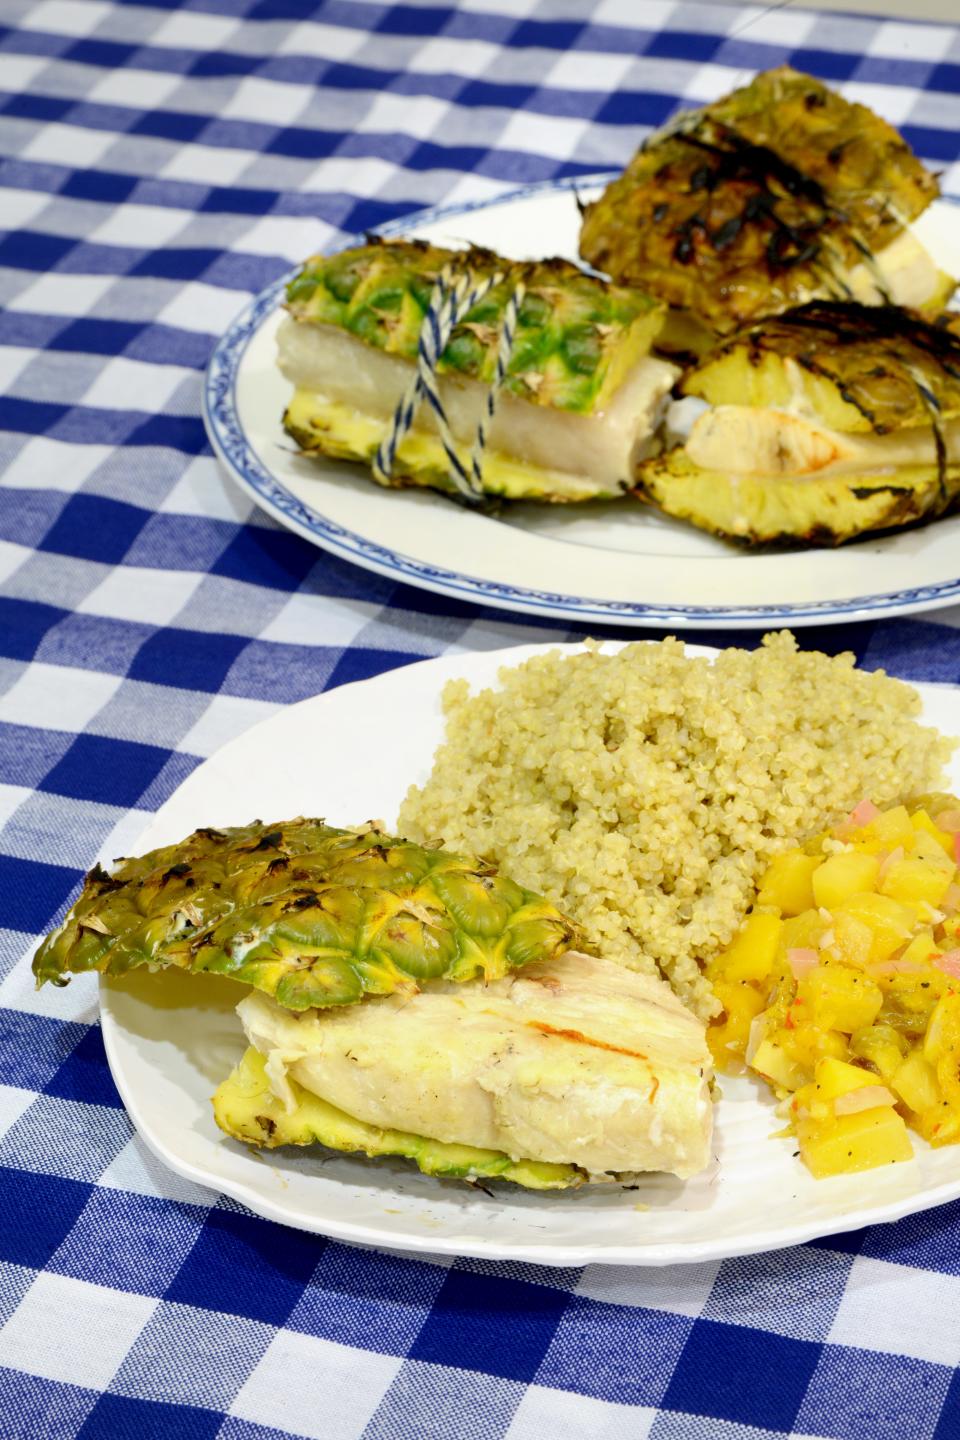 The mahi-mahi in today's recipe is accompanied by sides of chutney and quinoa.